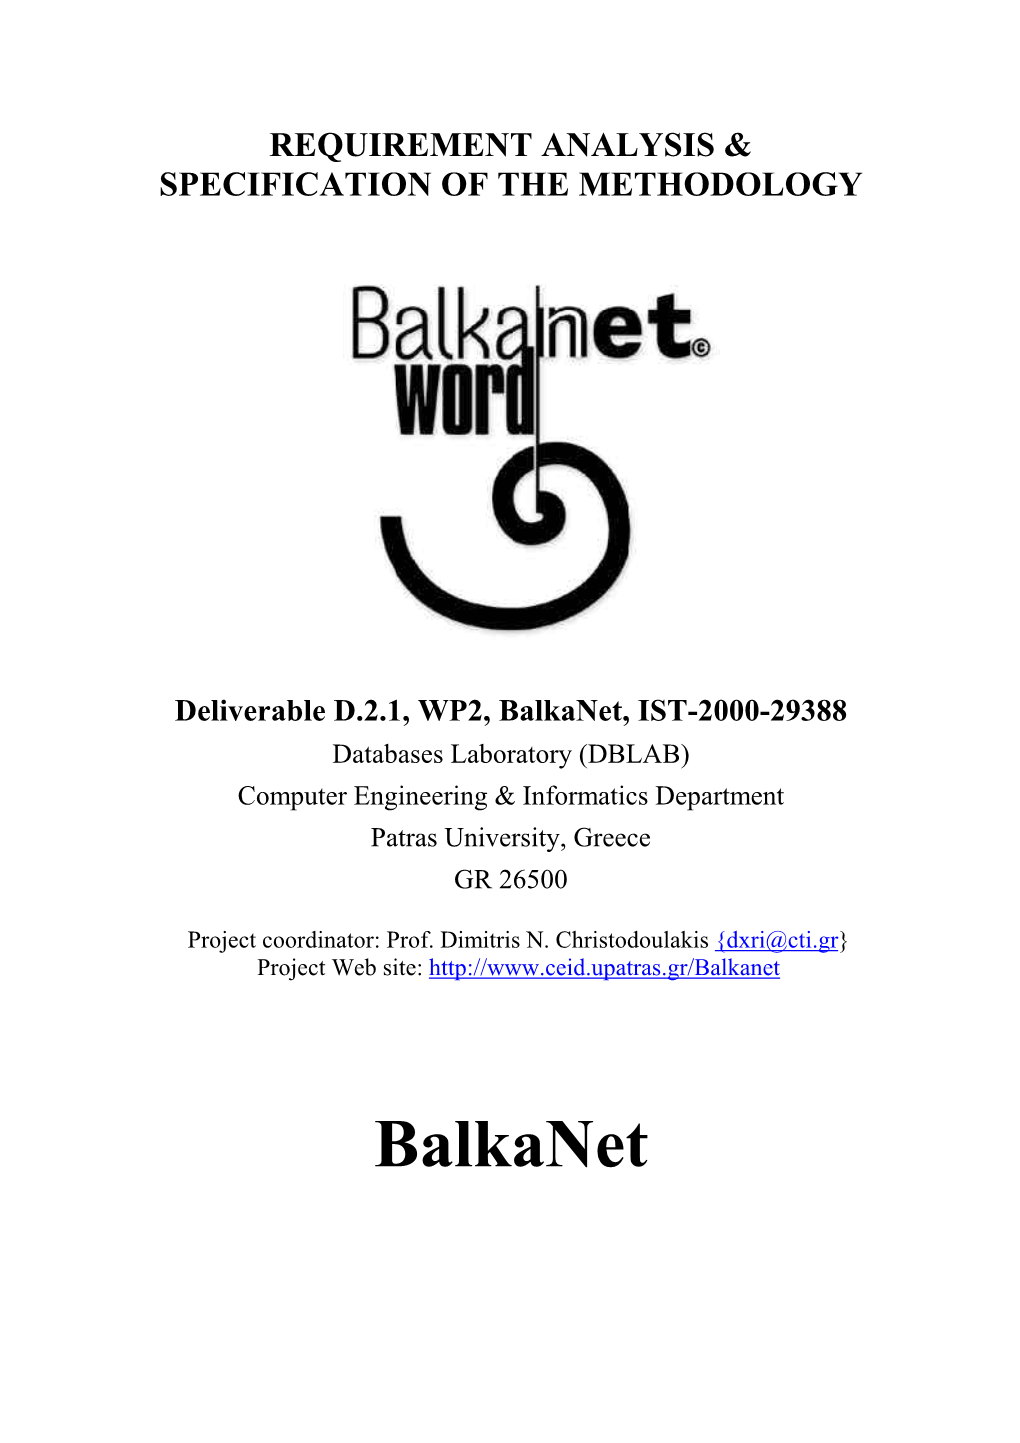 Balkanet, IST-2000-29388 Databases Laboratory (DBLAB) Computer Engineering & Informatics Department Patras University, Greece GR 26500